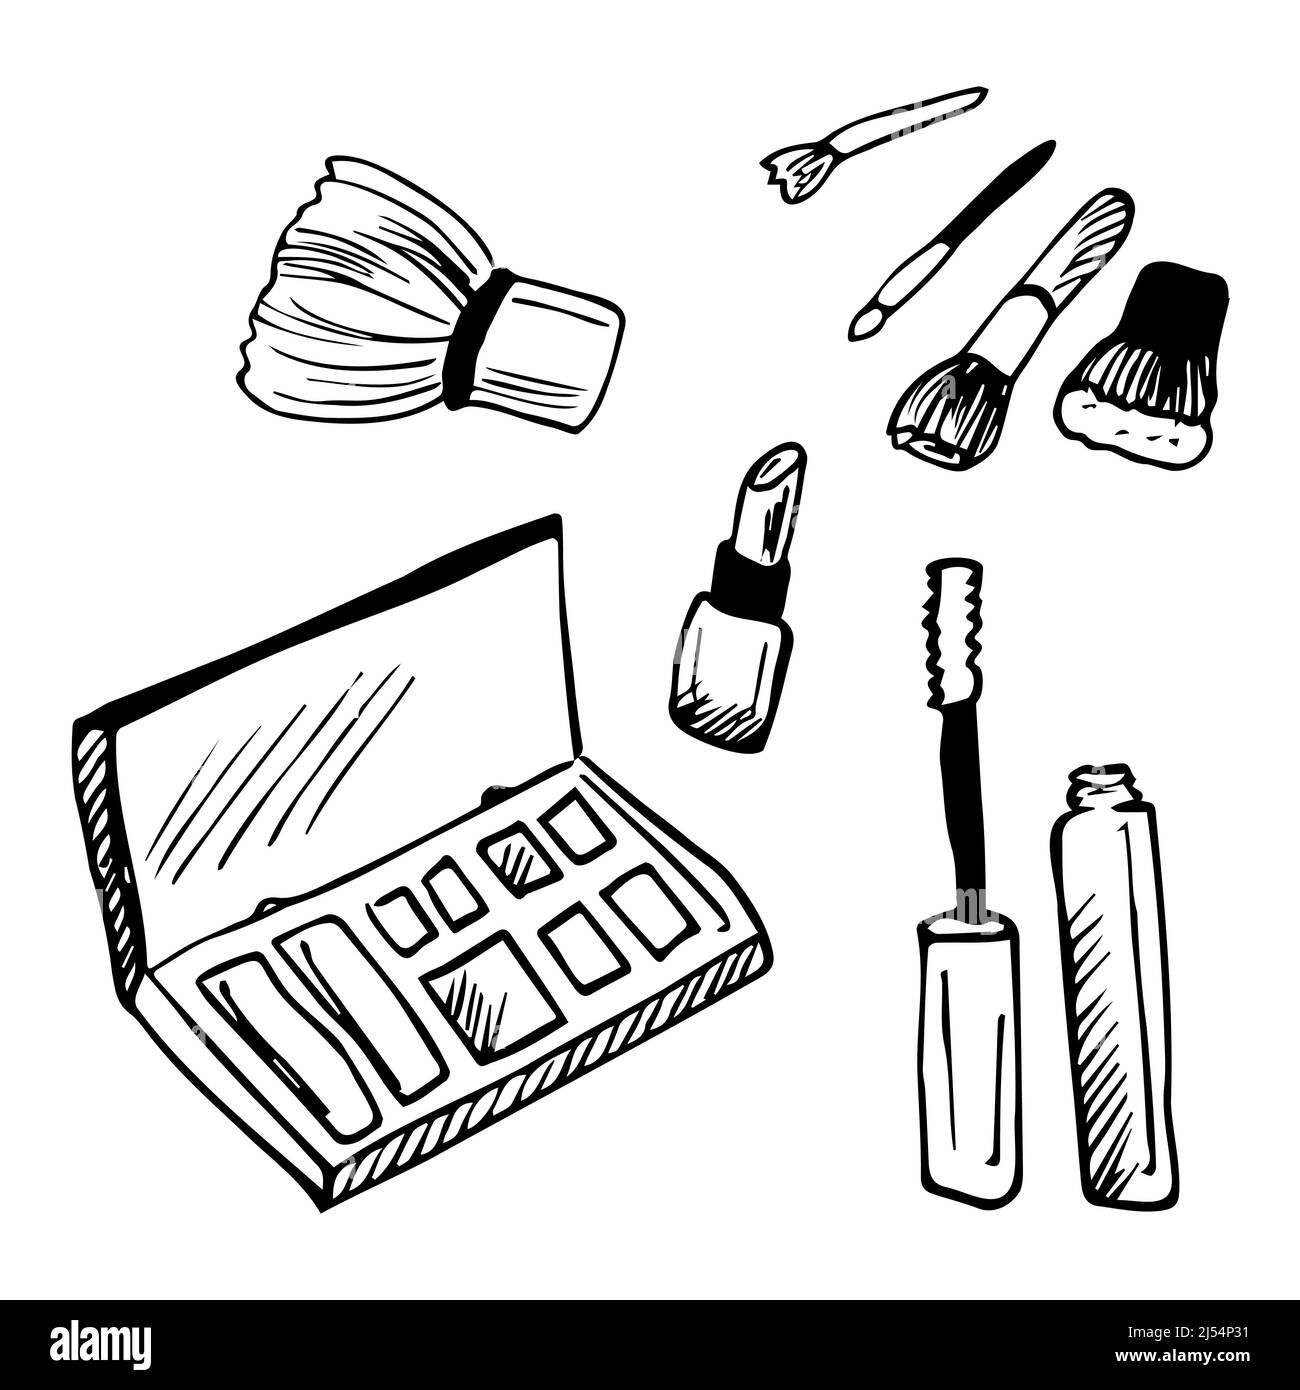 Buy Chiwa Set of 14 7pcs Makeup Brush Kit Set With TYA Makeup Kit3D  Contour StickPrimer Fixer High Quality Foundation Kajal Waterproof 36H  Sketch eyeliner and 3in1 Combo Set Eyelashes Curler And